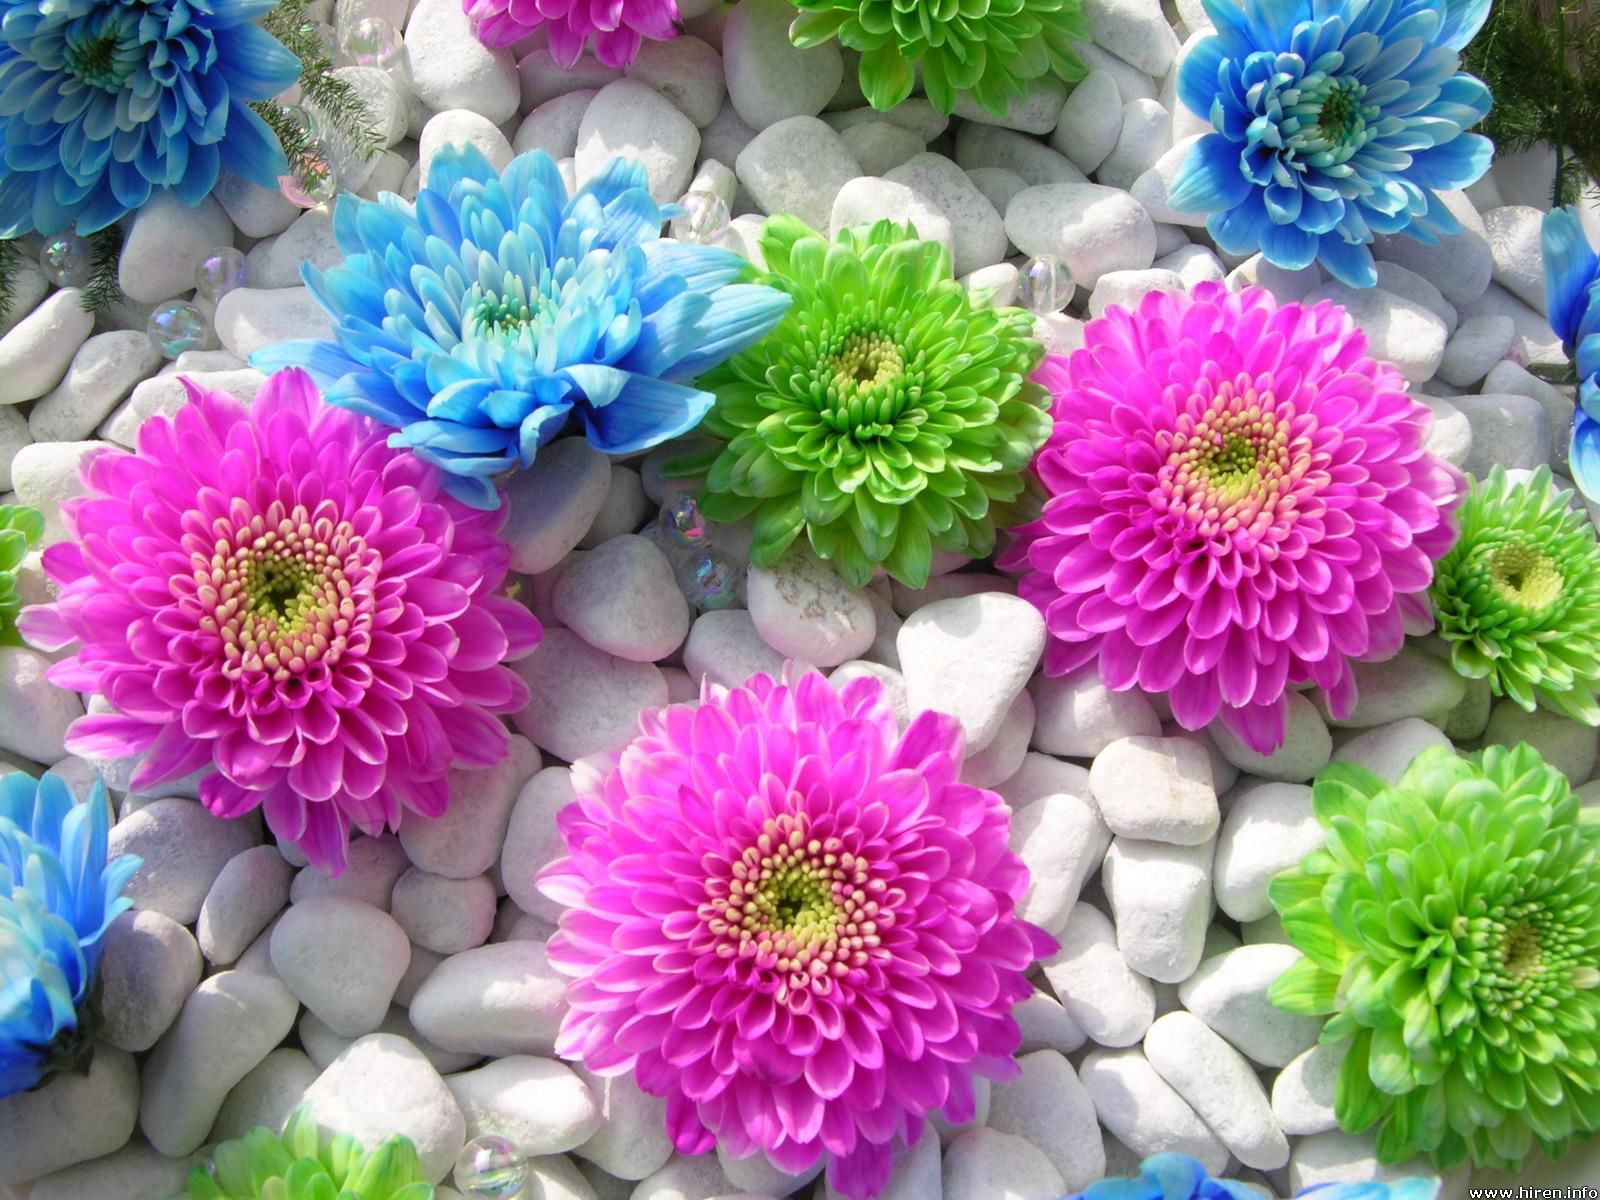 Download Wallpapers free: Nice Flowers wallpaper